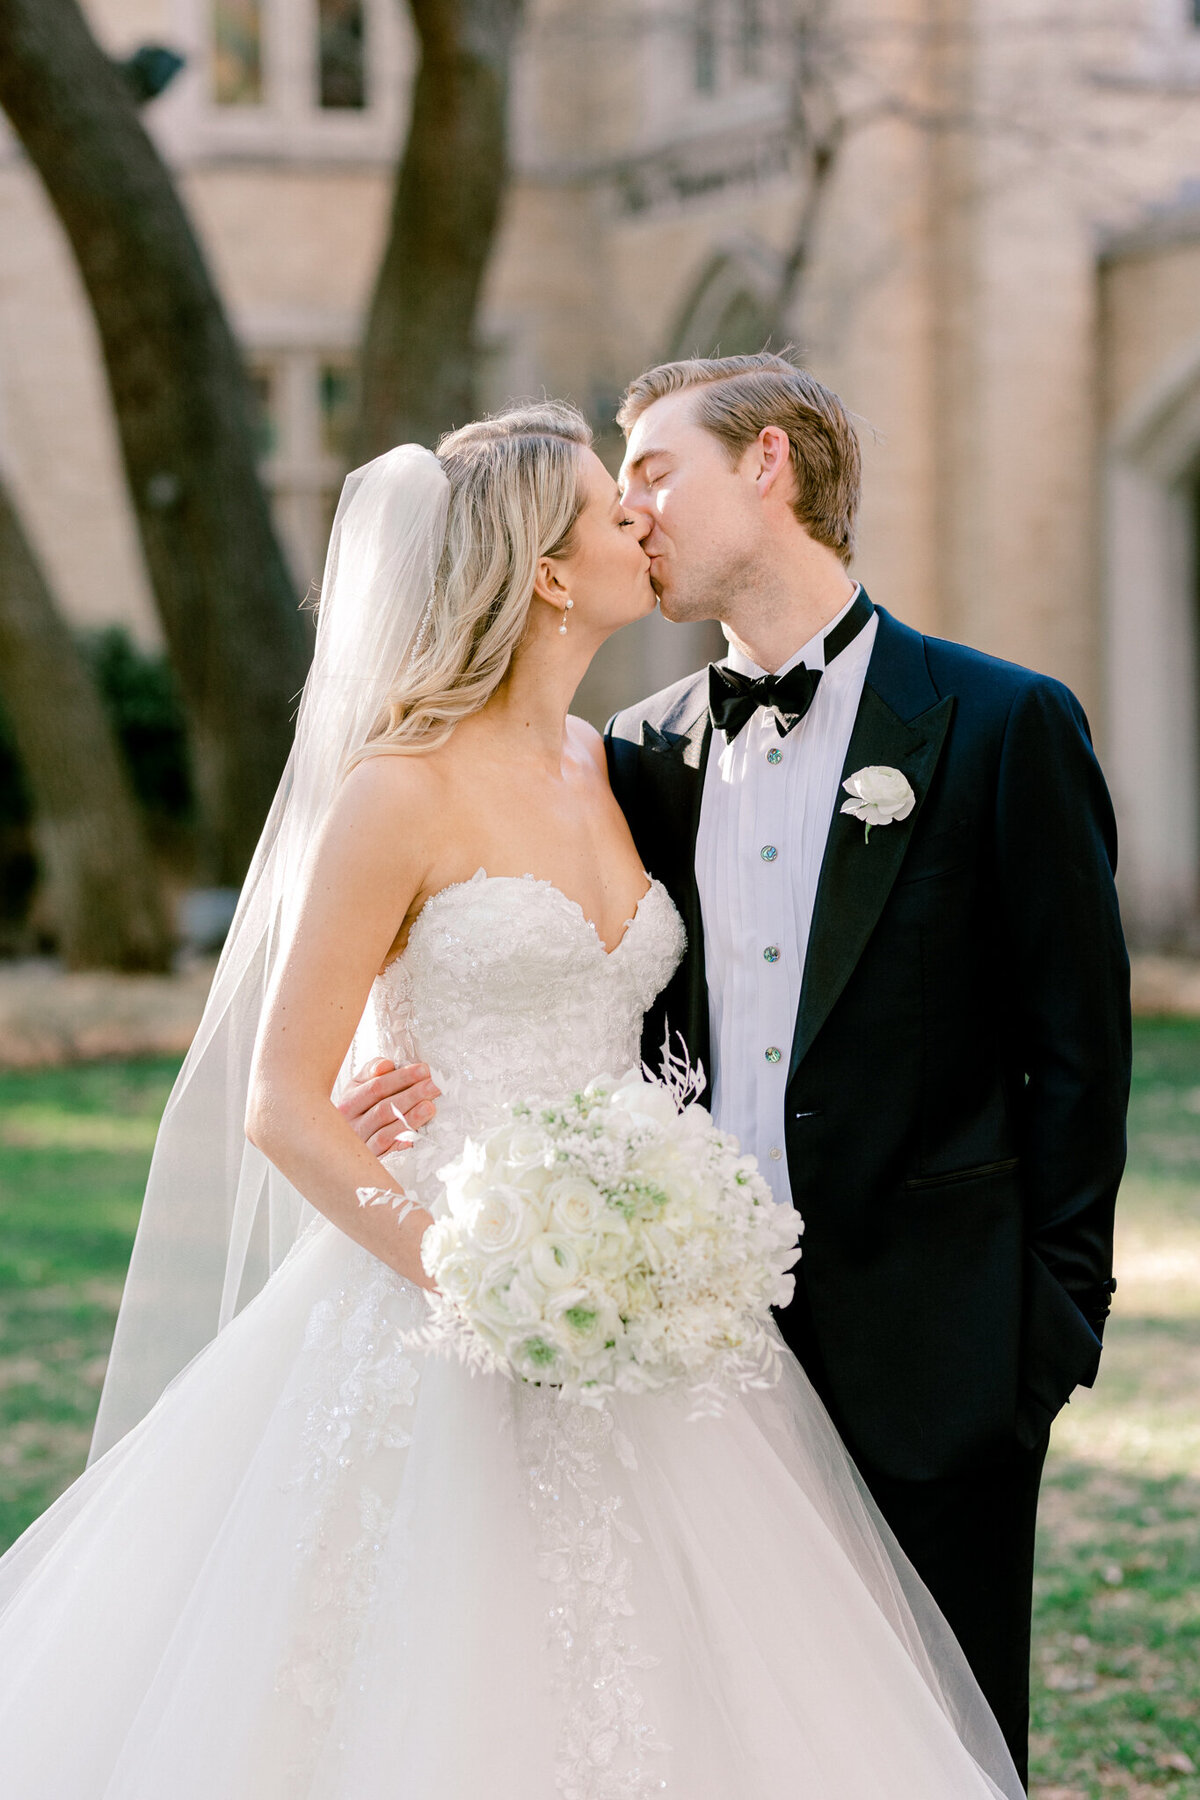 Shelby & Thomas's Wedding at HPUMC The Room on Main | Dallas Wedding Photographer | Sami Kathryn Photography-2